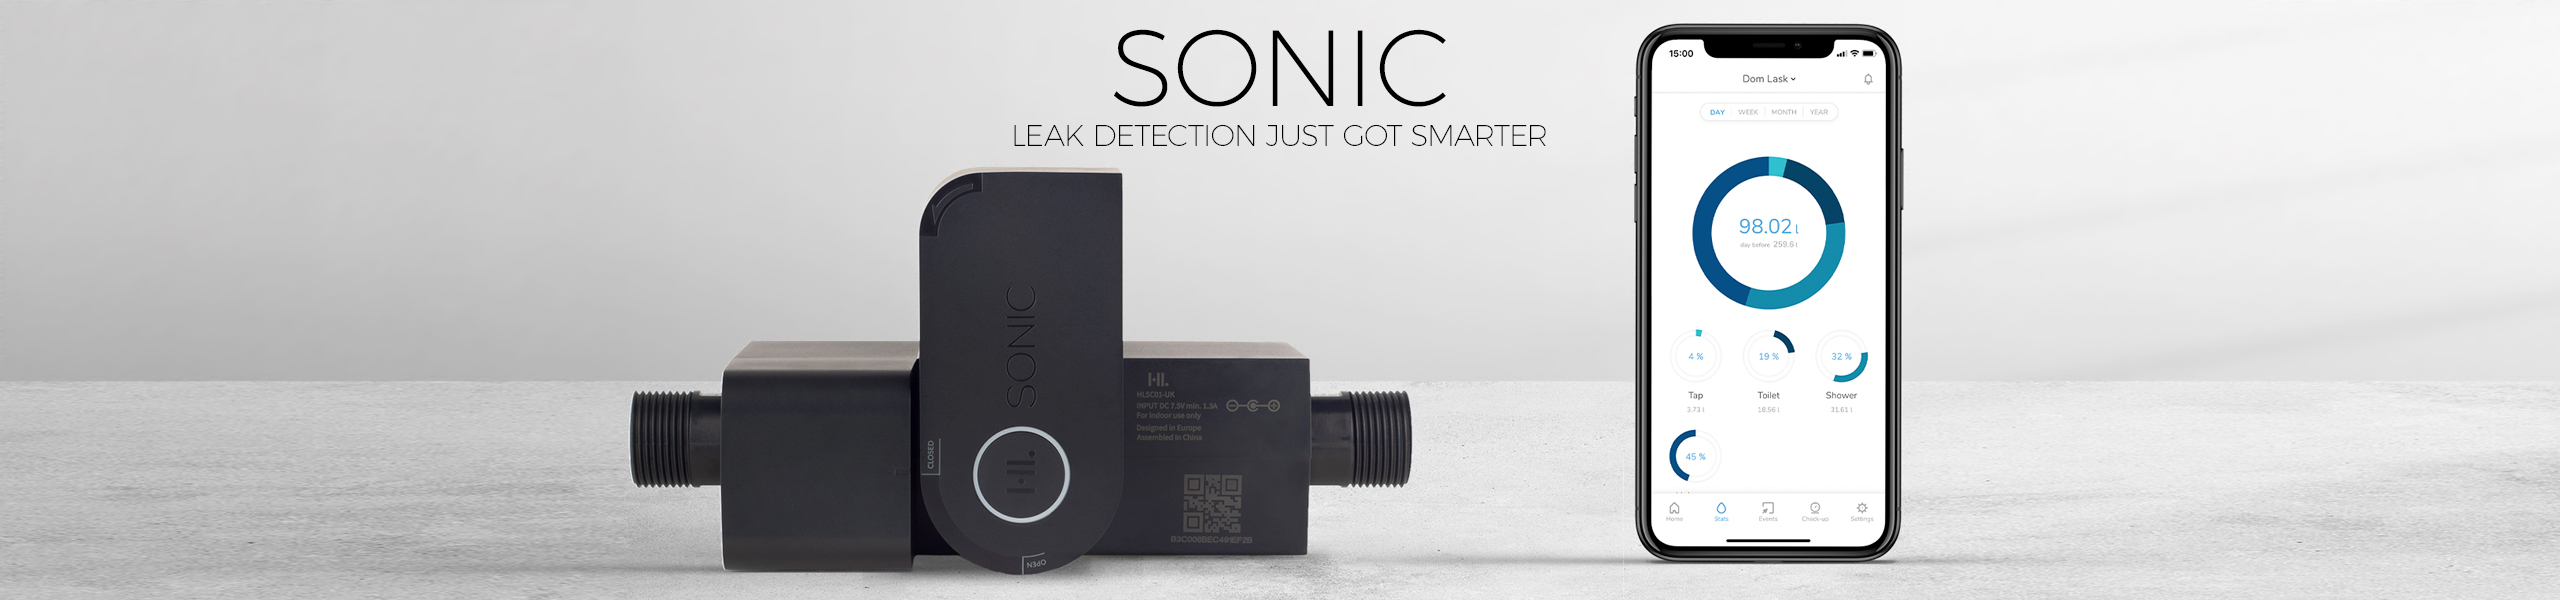 Sonic Ultrasonic Water Leak Detection Shut-Off System